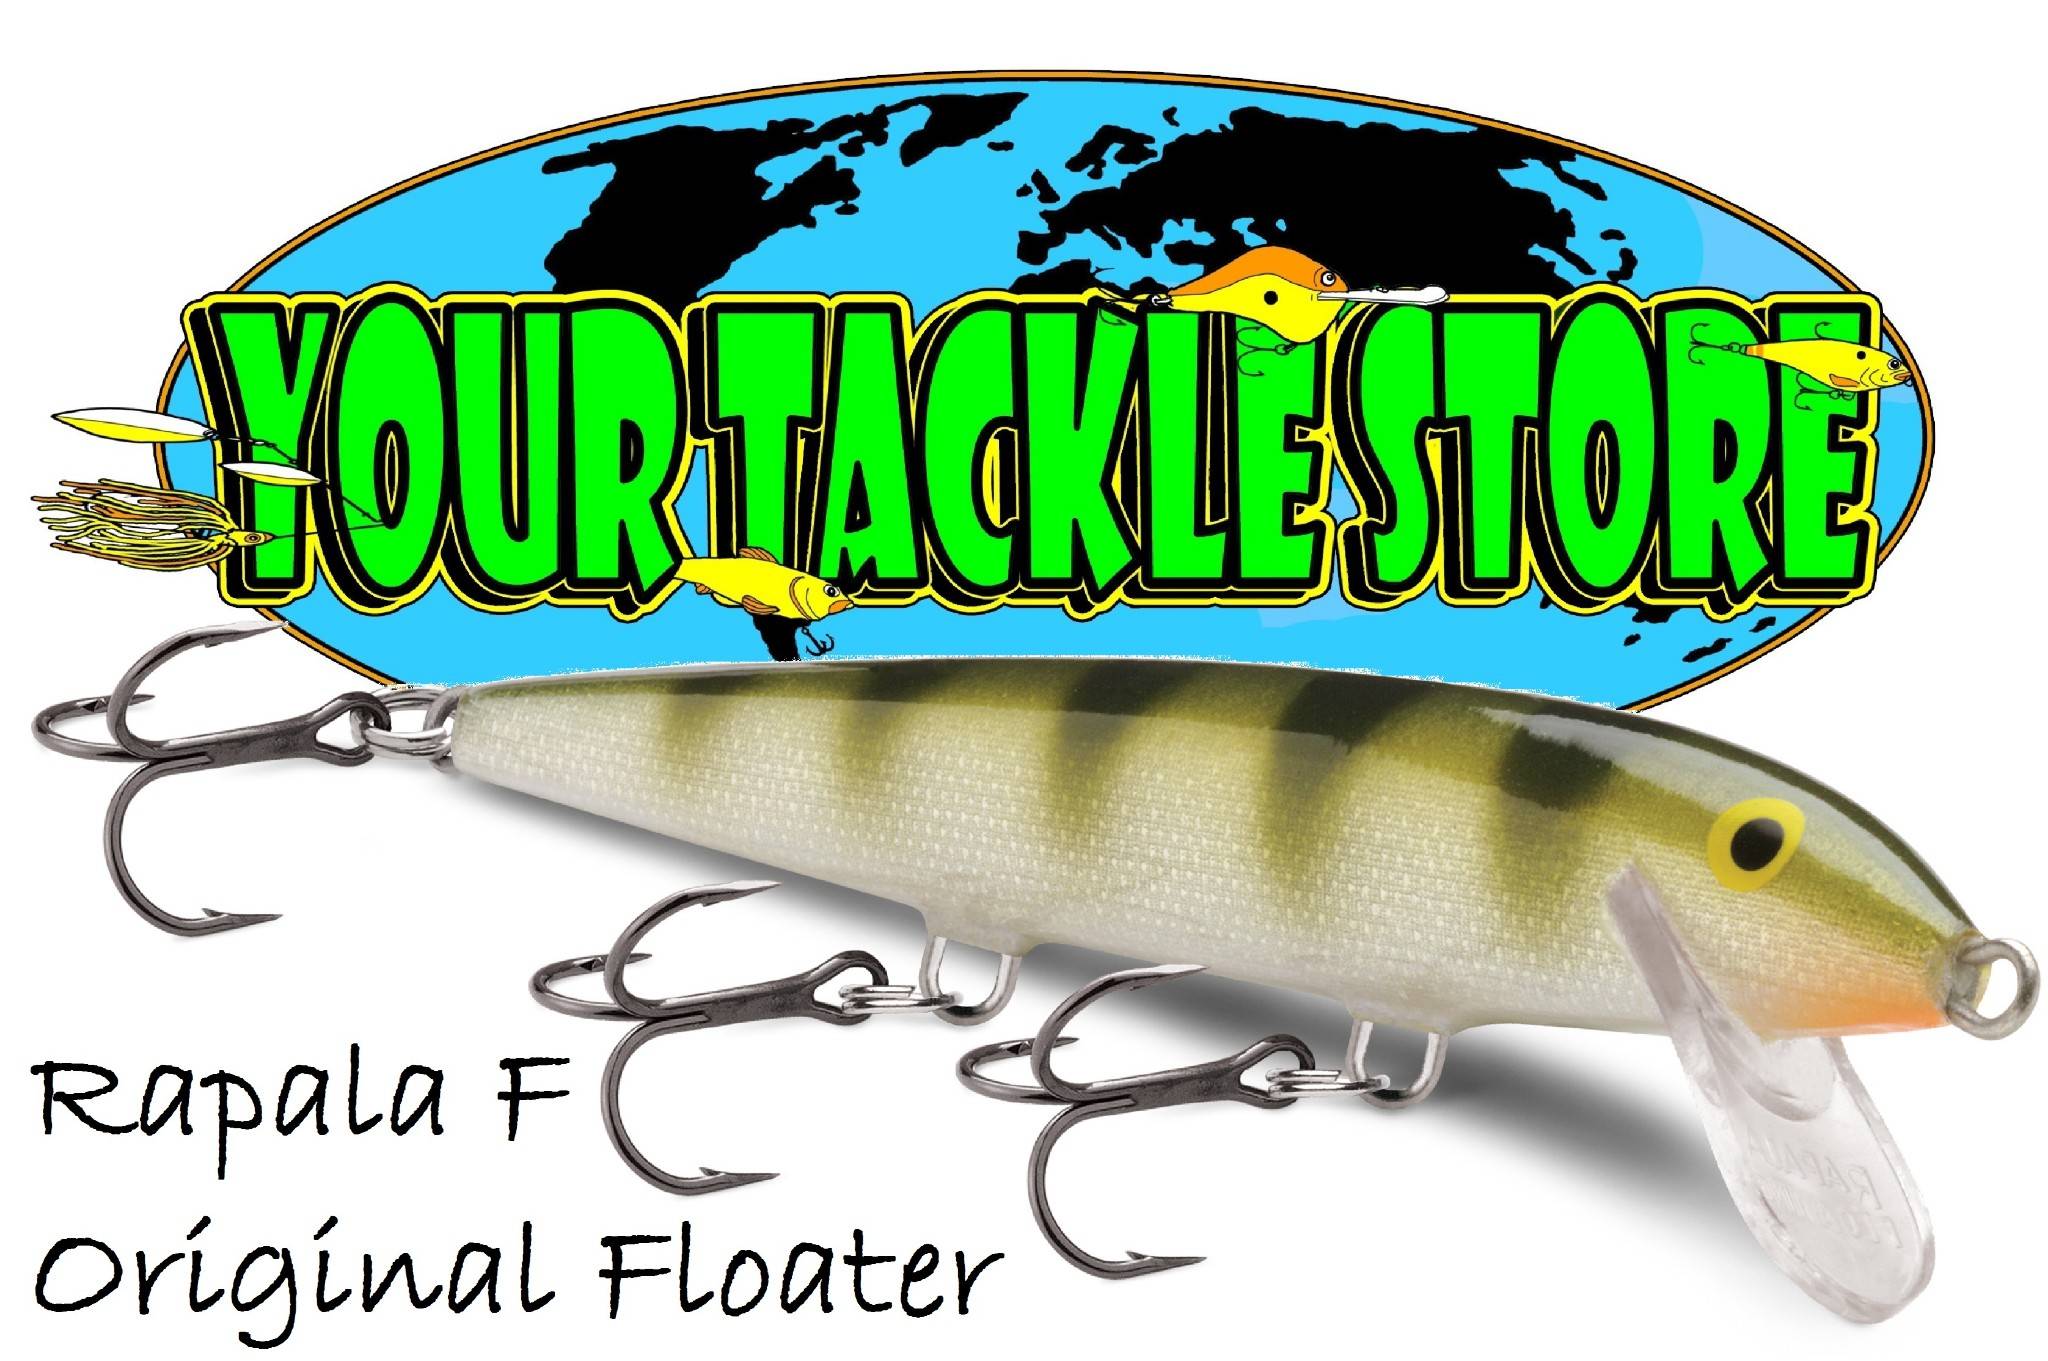 Original floater (floating original) / каталог rapala (рапала) / рыболовное снаряжение рапала